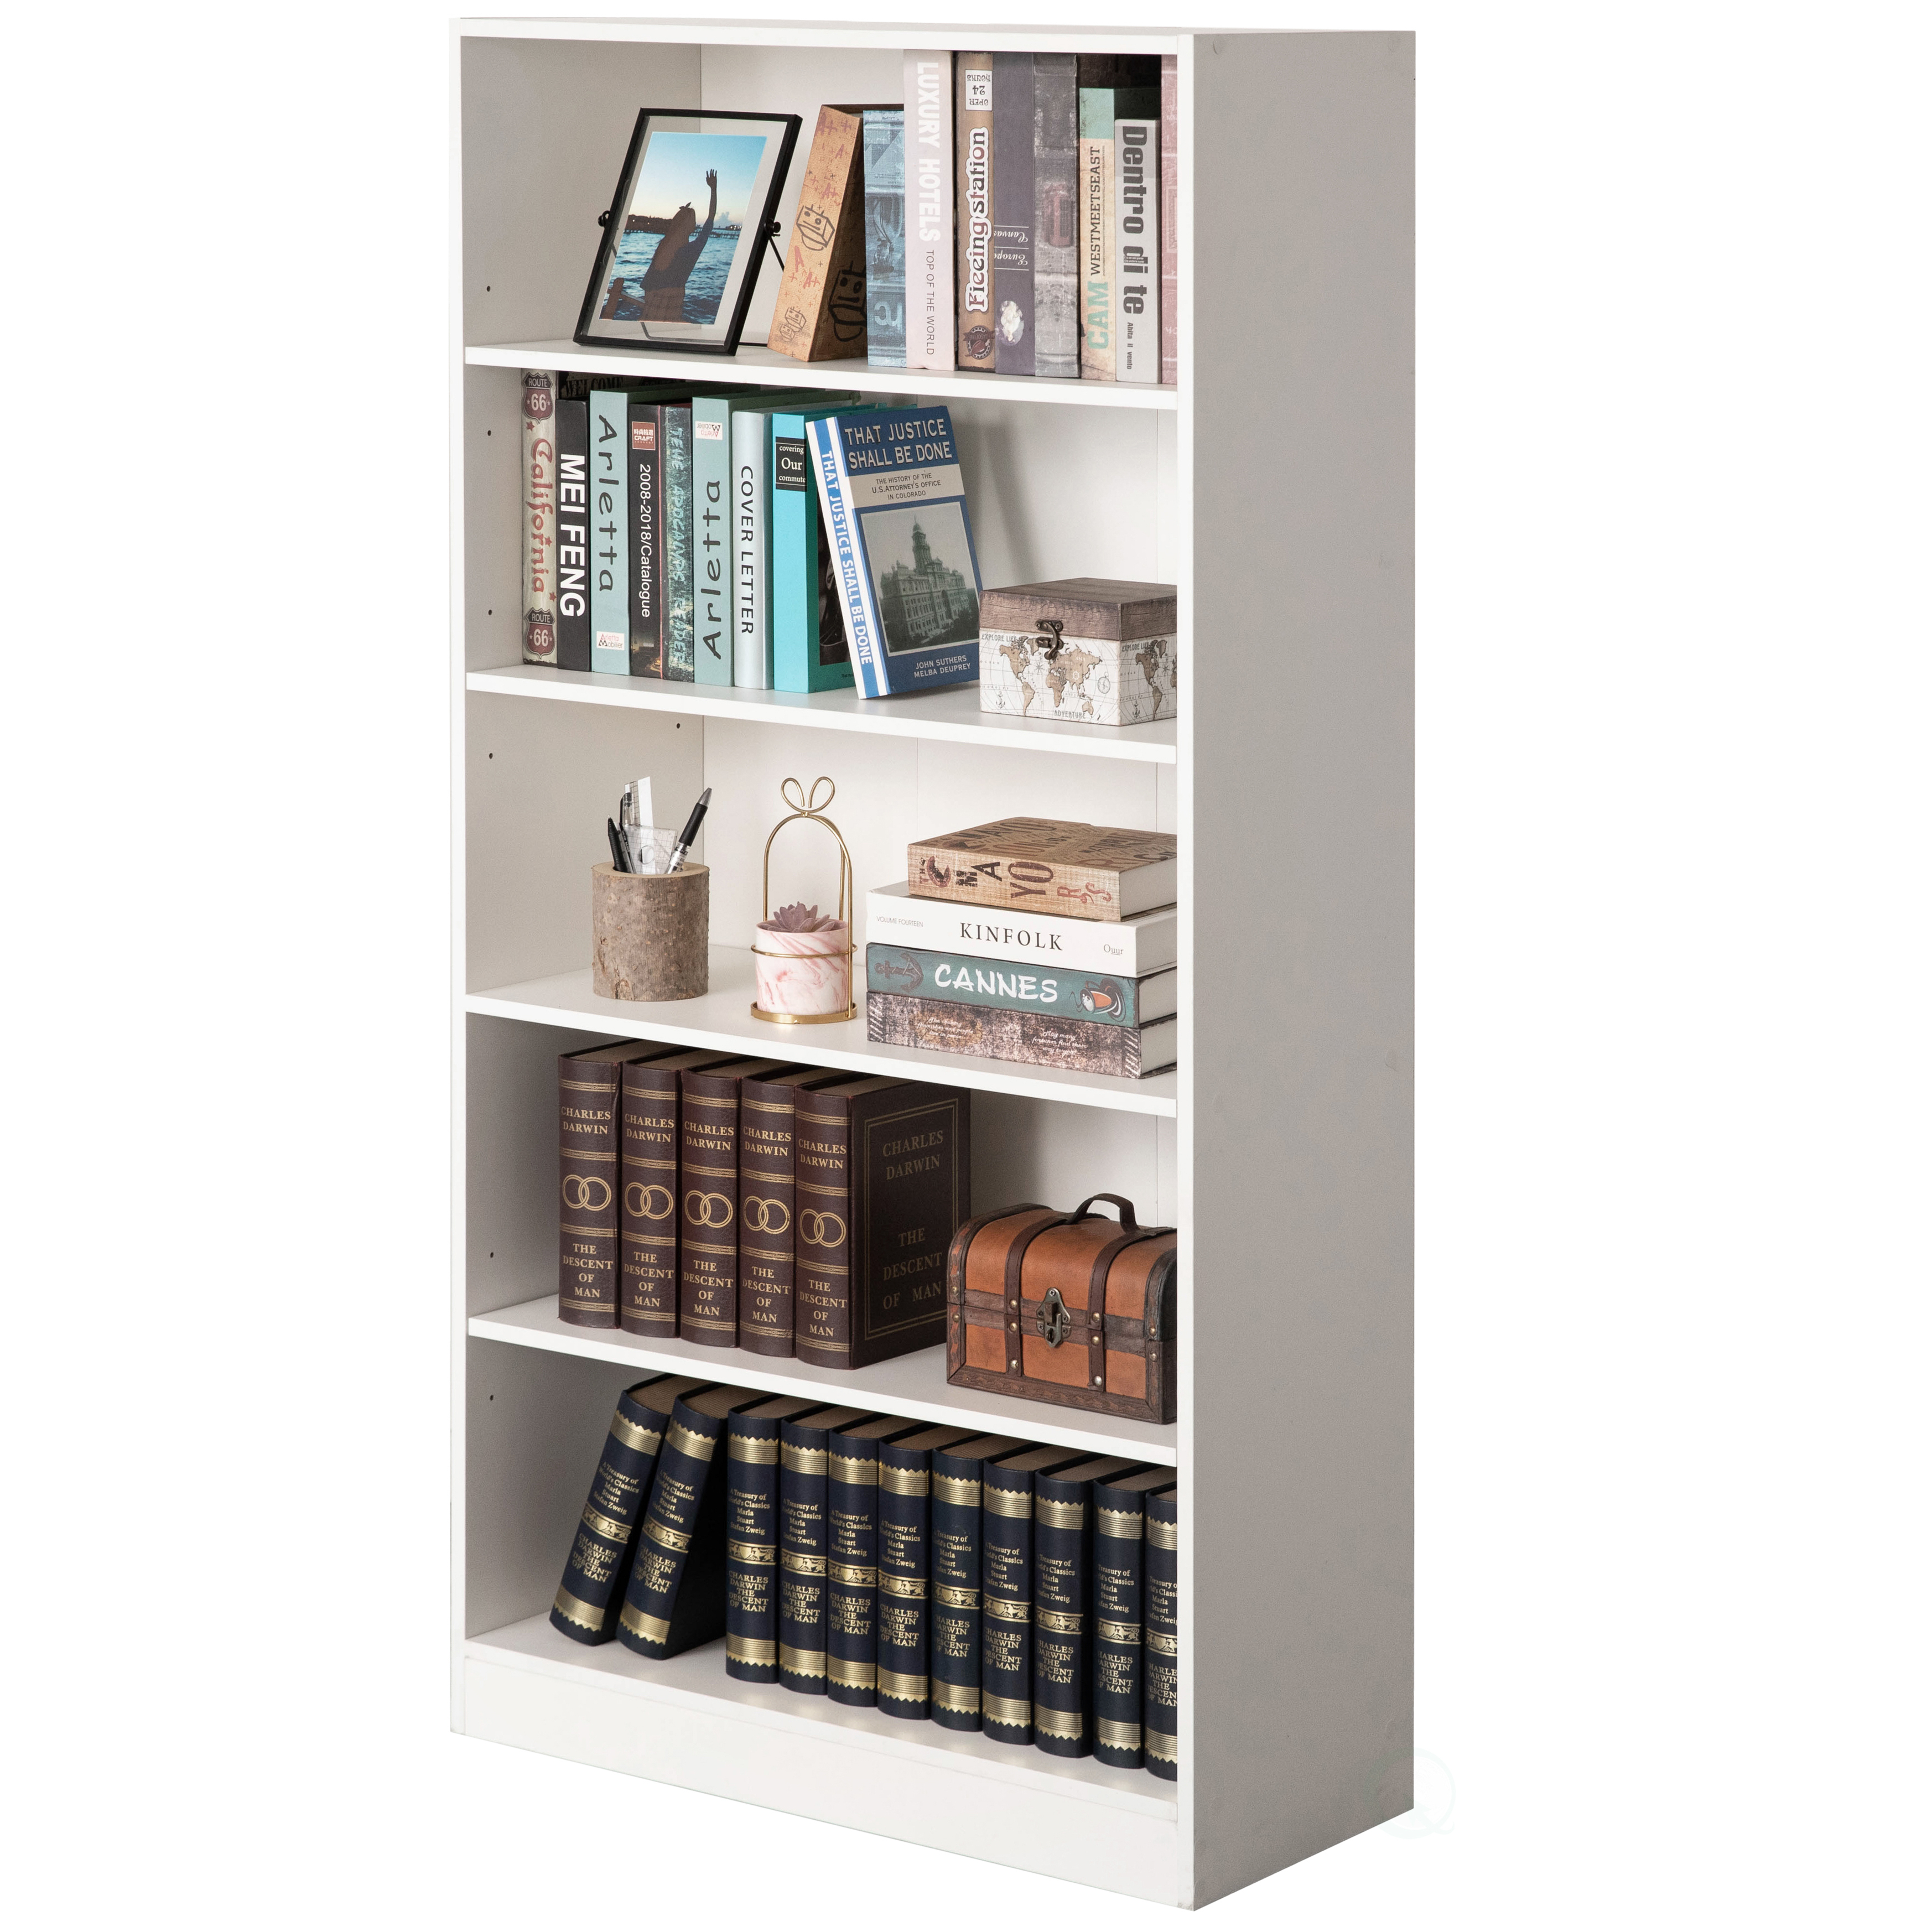 Freestanding Classic Wooden Display Bookshelf, Floor Standing Bookcase, With 5 Open Display Shelves - White